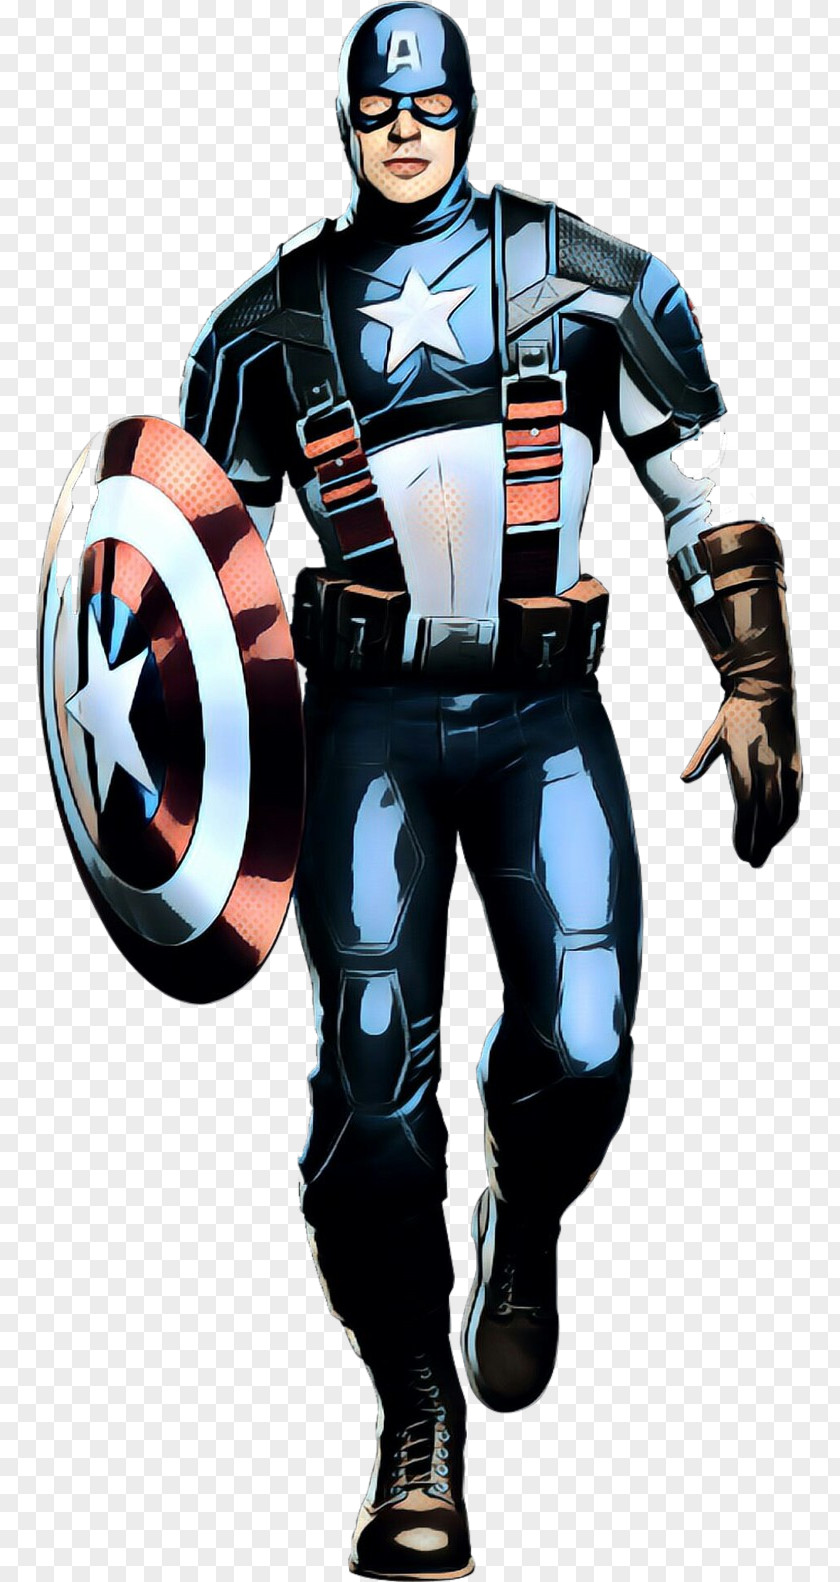 Captain America The Avengers Chris Evans Iron Man Superhero PNG